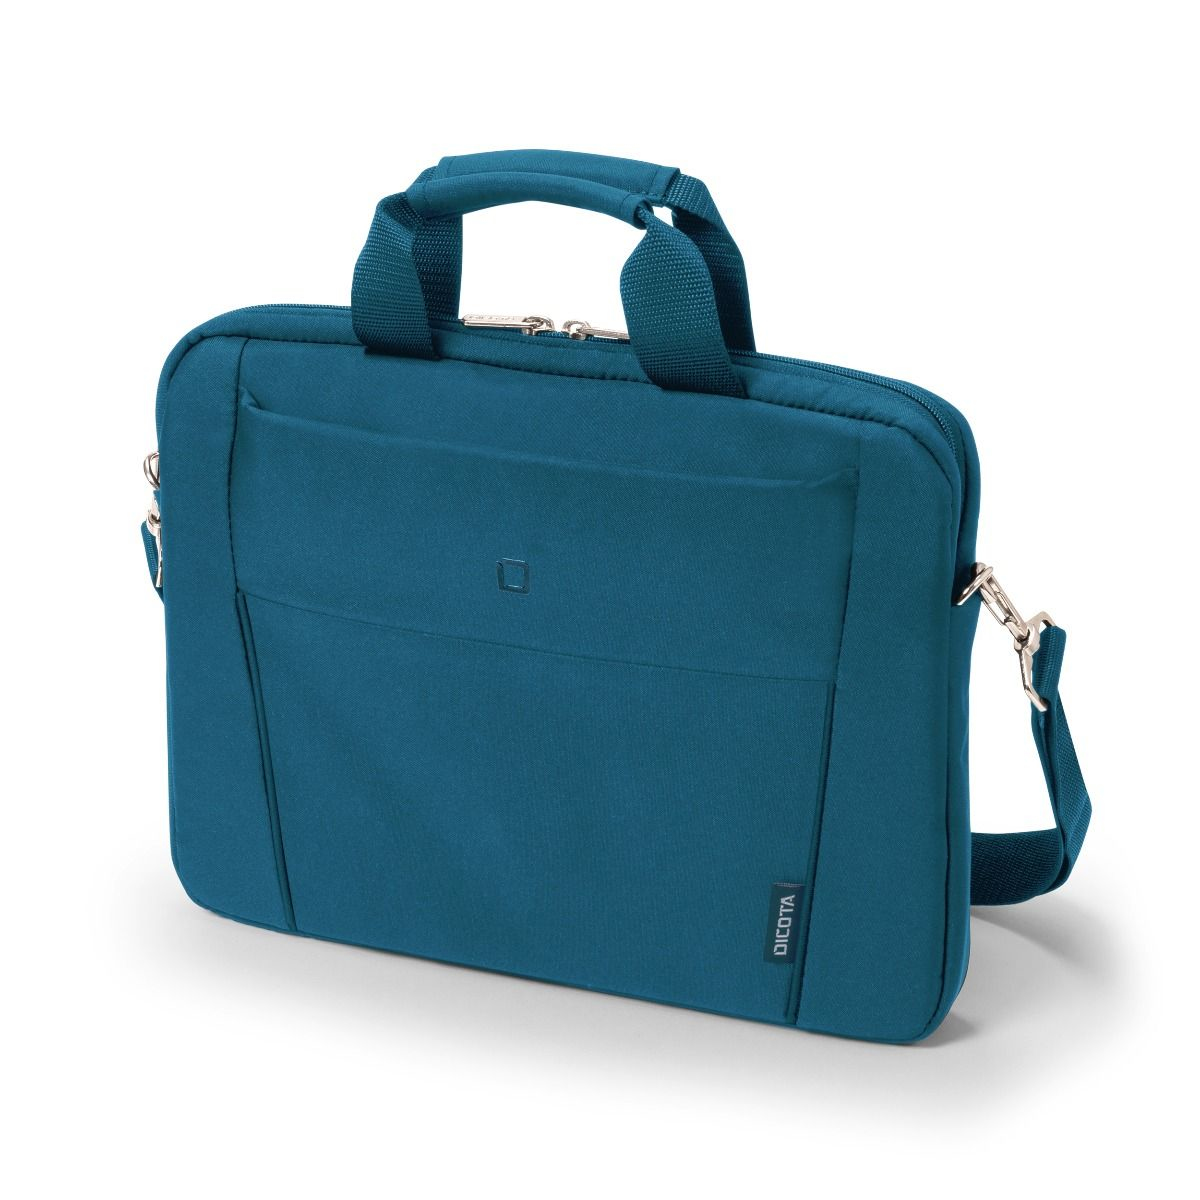 Dicota Slim Case Base Blue Laptop Bag Fits 13-14.1-Inch